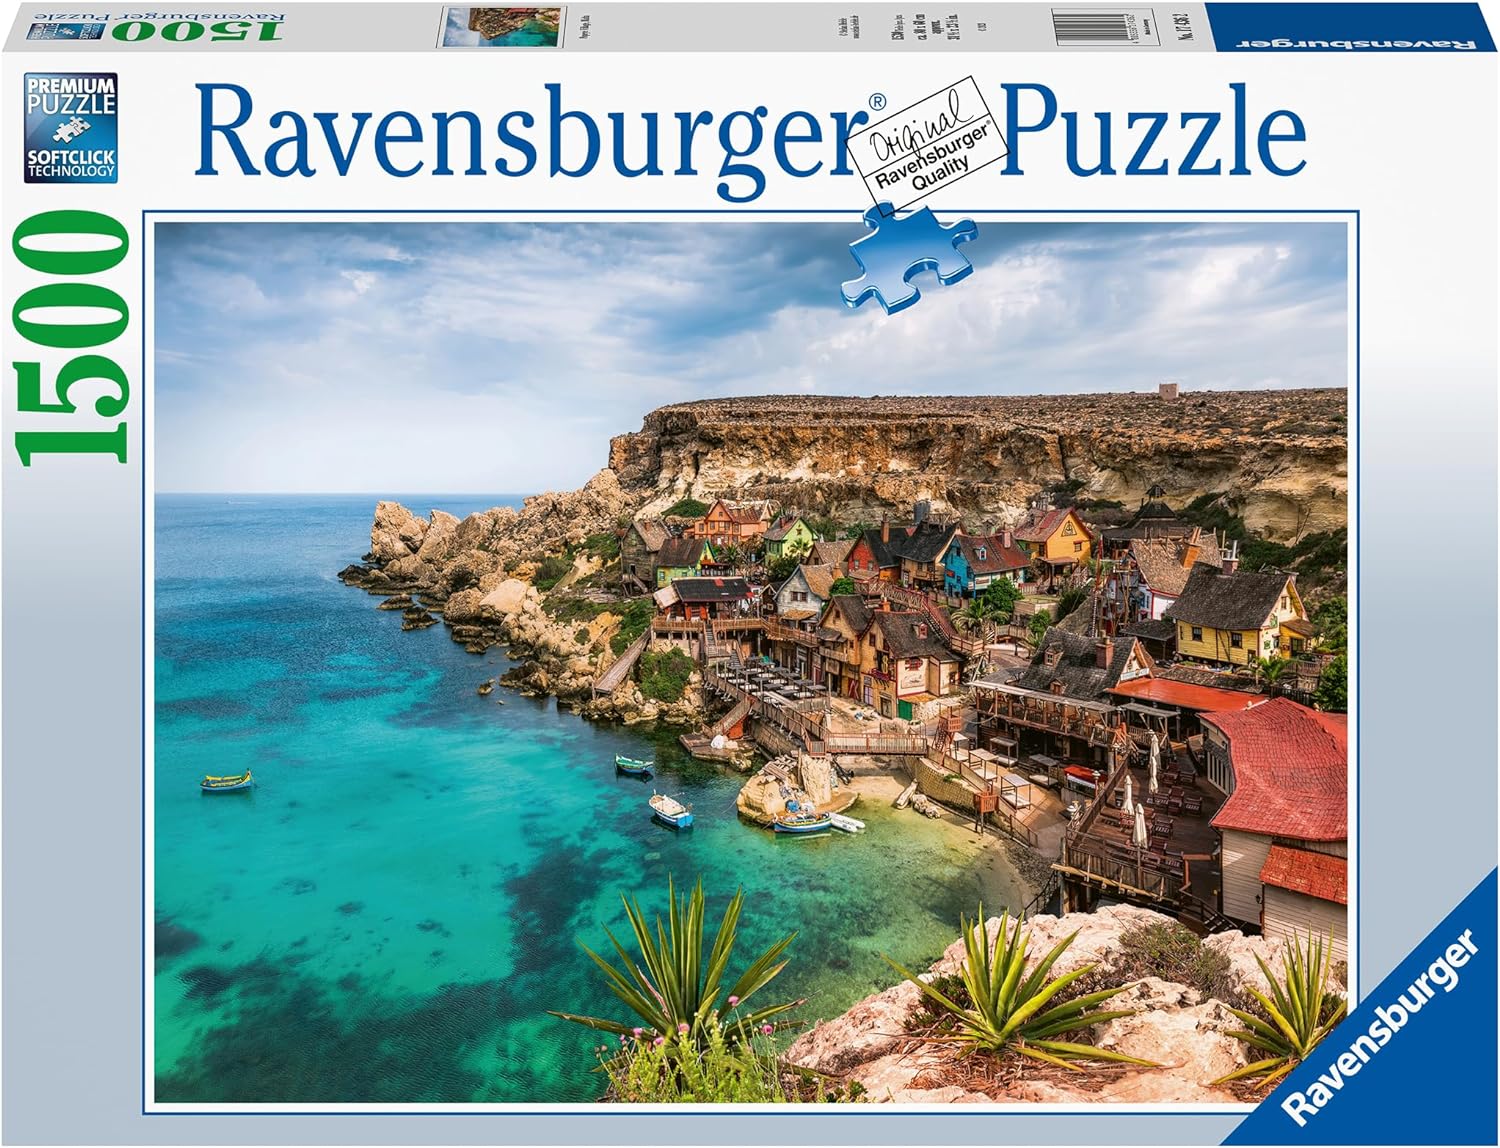 Ravensburger 1500 Piece Jigsaw Puzzle - Popeye Village, Malta - 174362